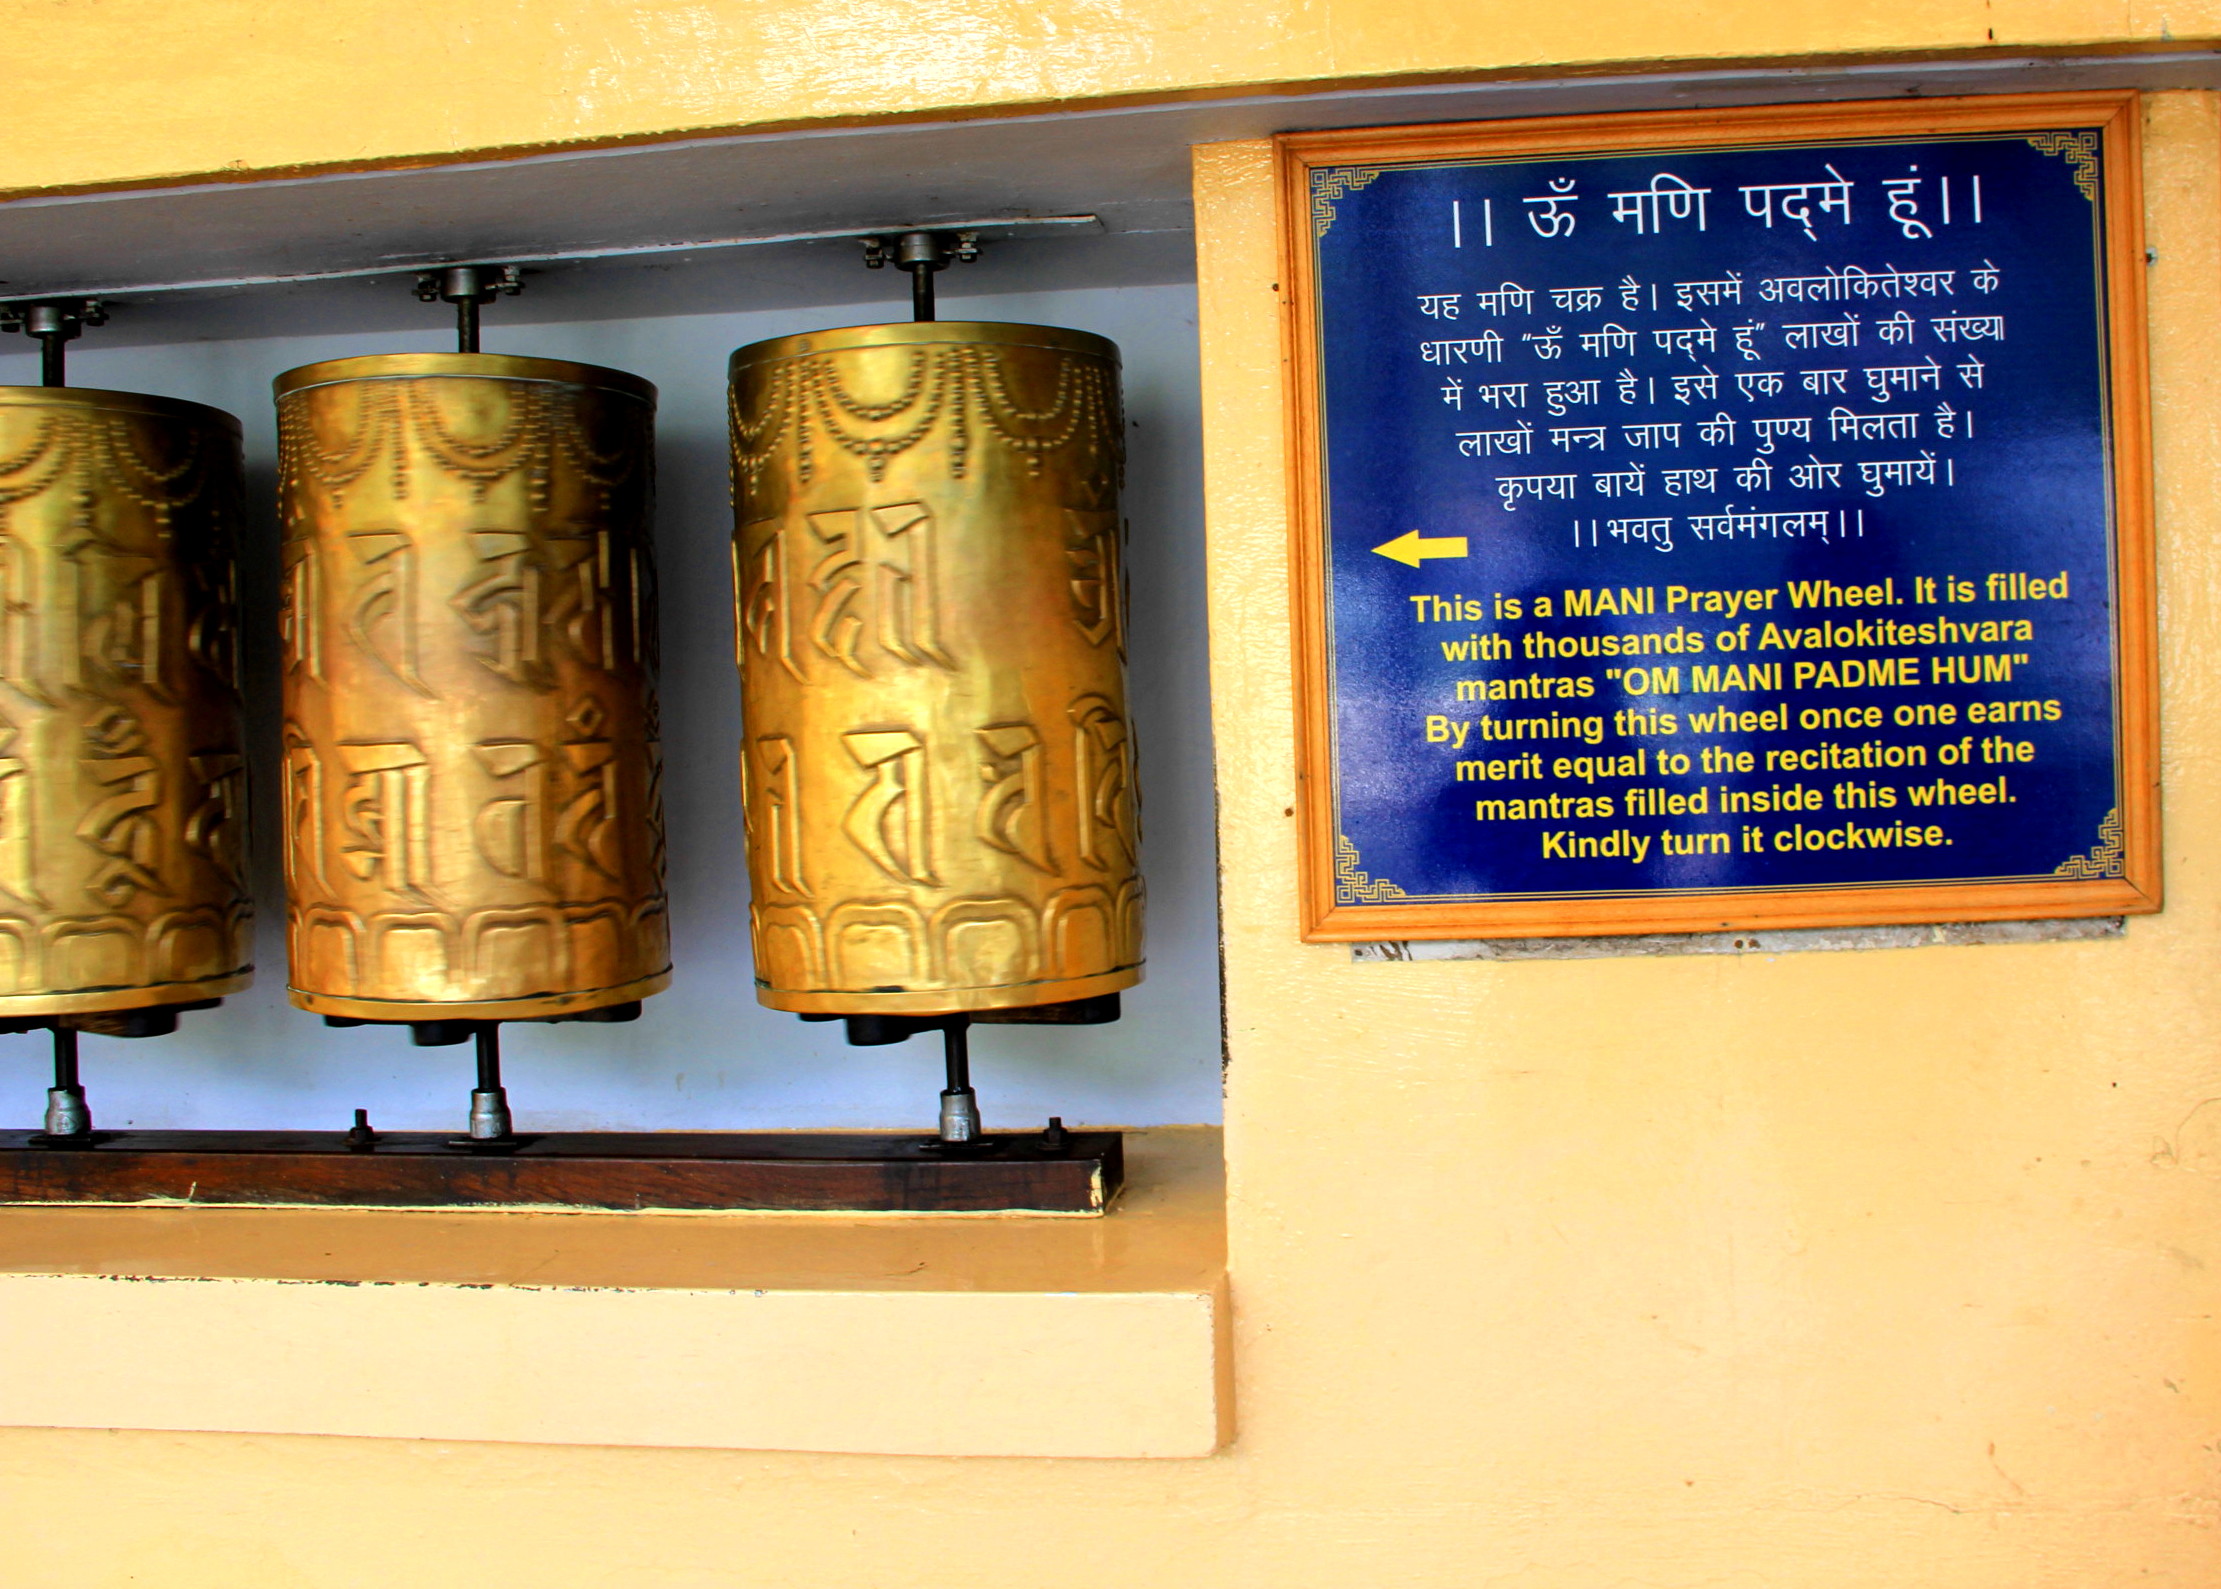 Prayer wheels at McLeod Ganj, Dharamsala, India